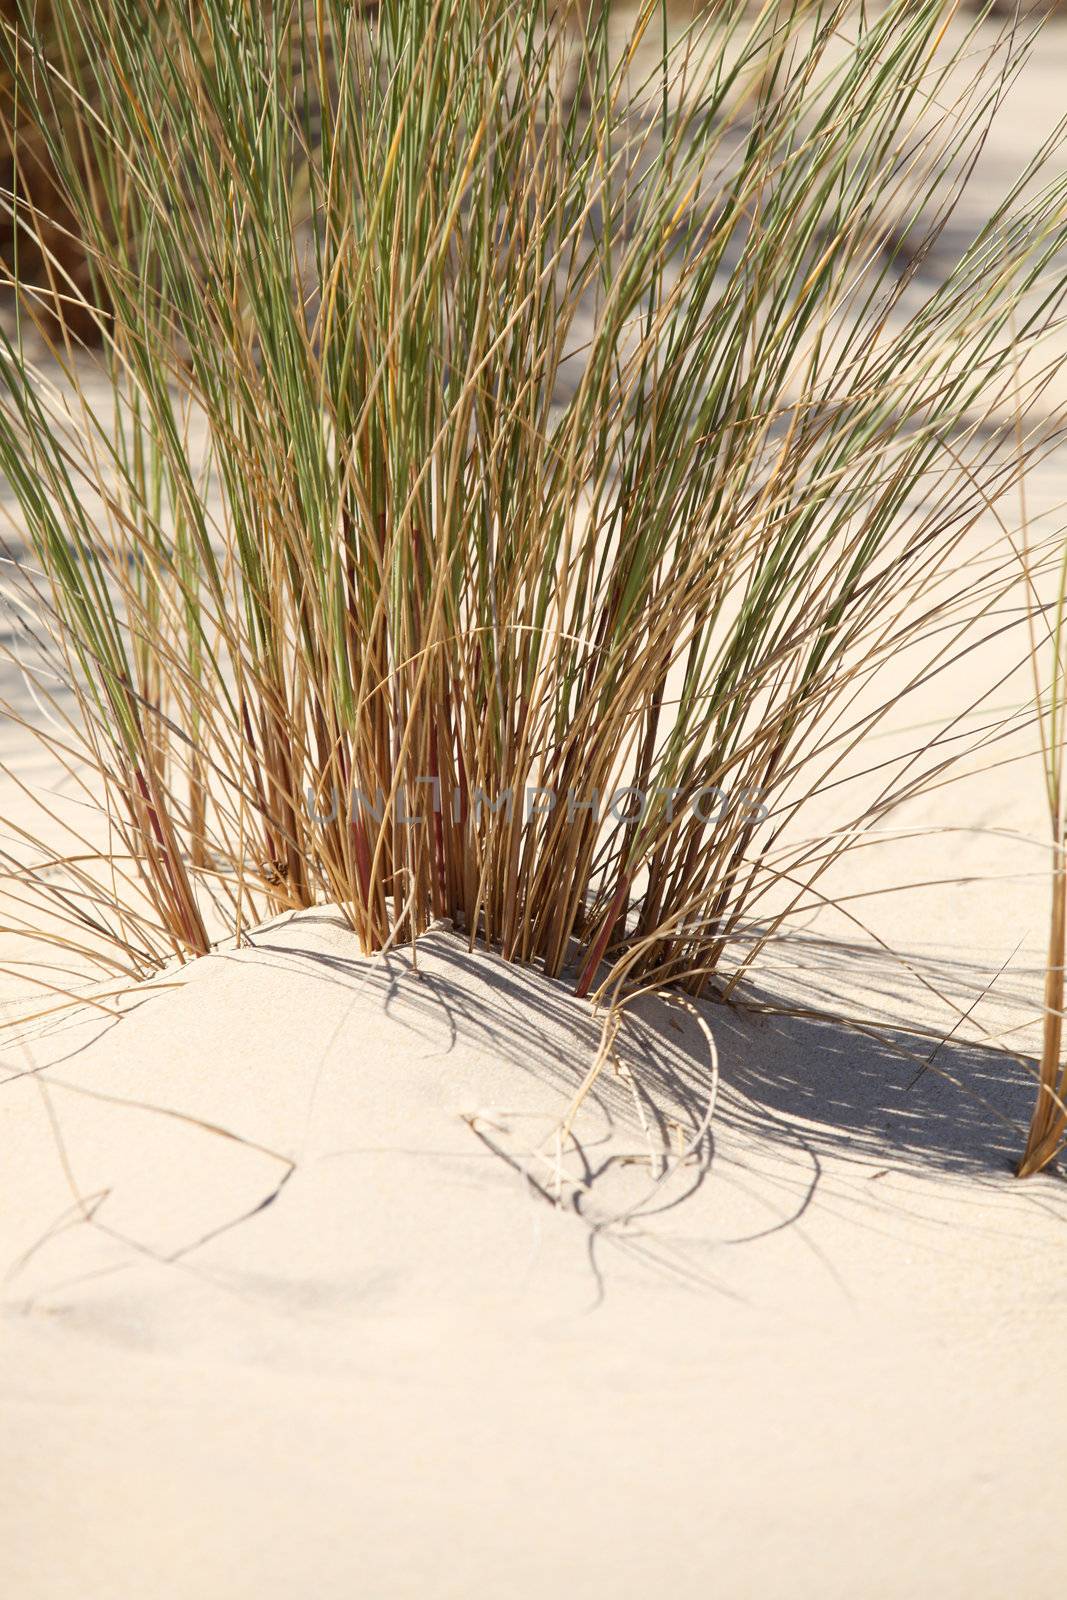 Reeds on a beach